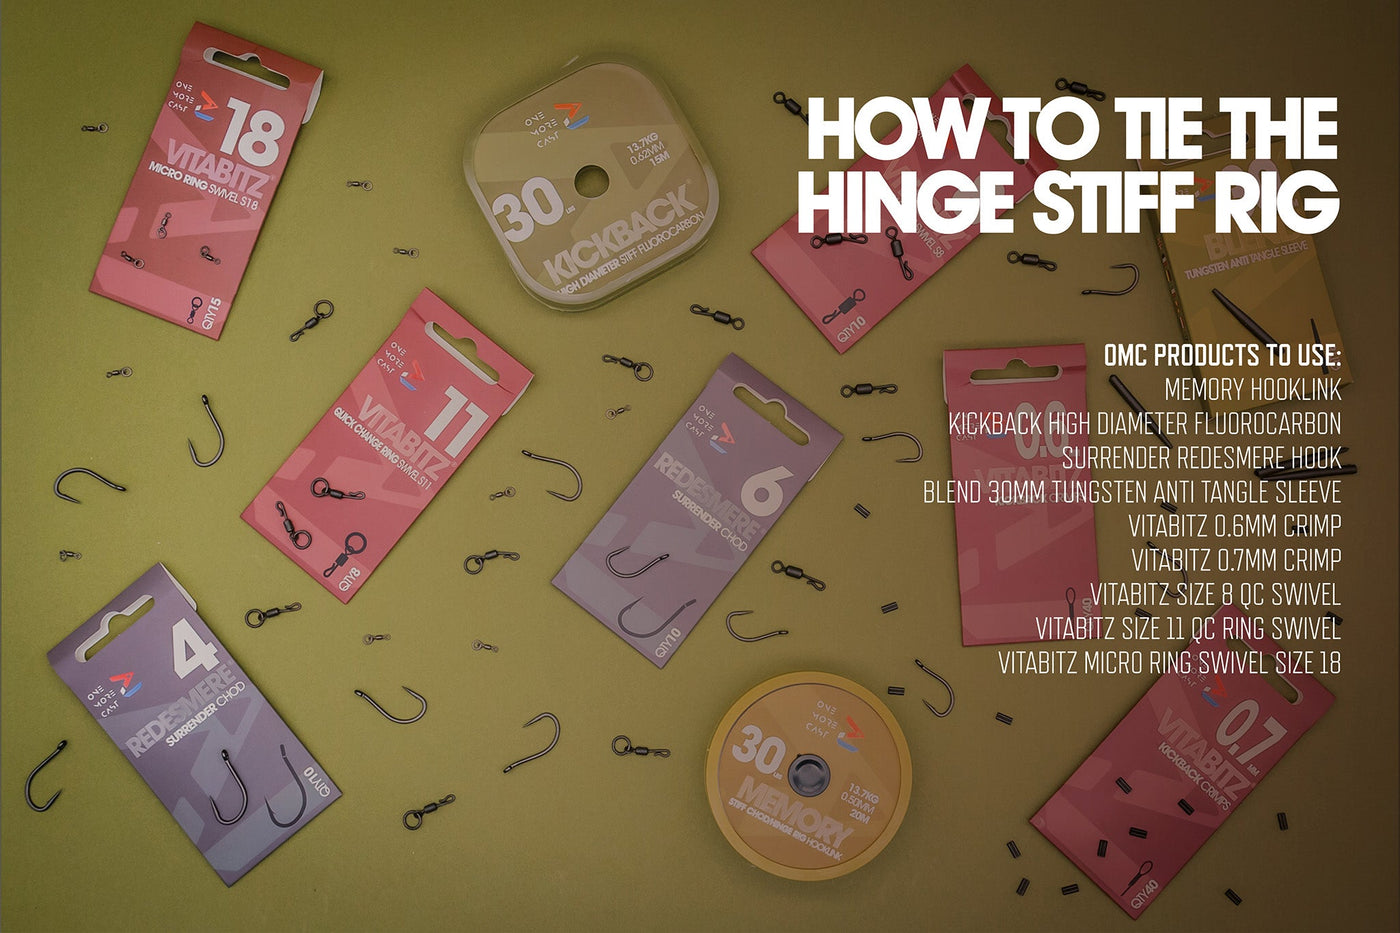 The Hinge Stiff Rig Pack